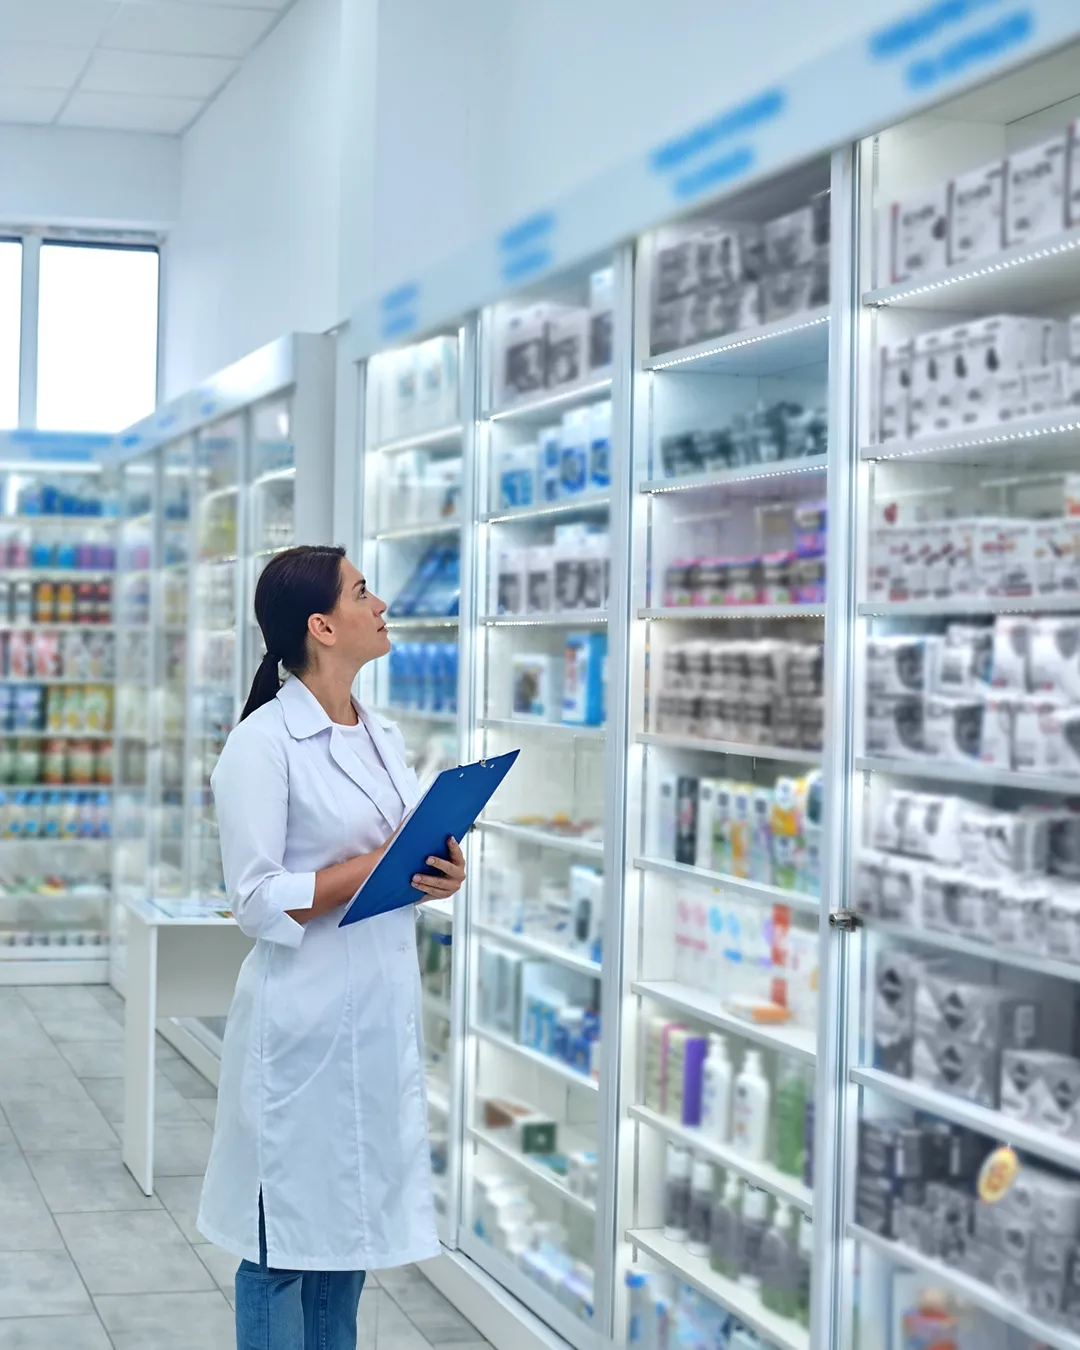 KemNet: The Innovative Pharmacy Revolutionizing Medication Experience